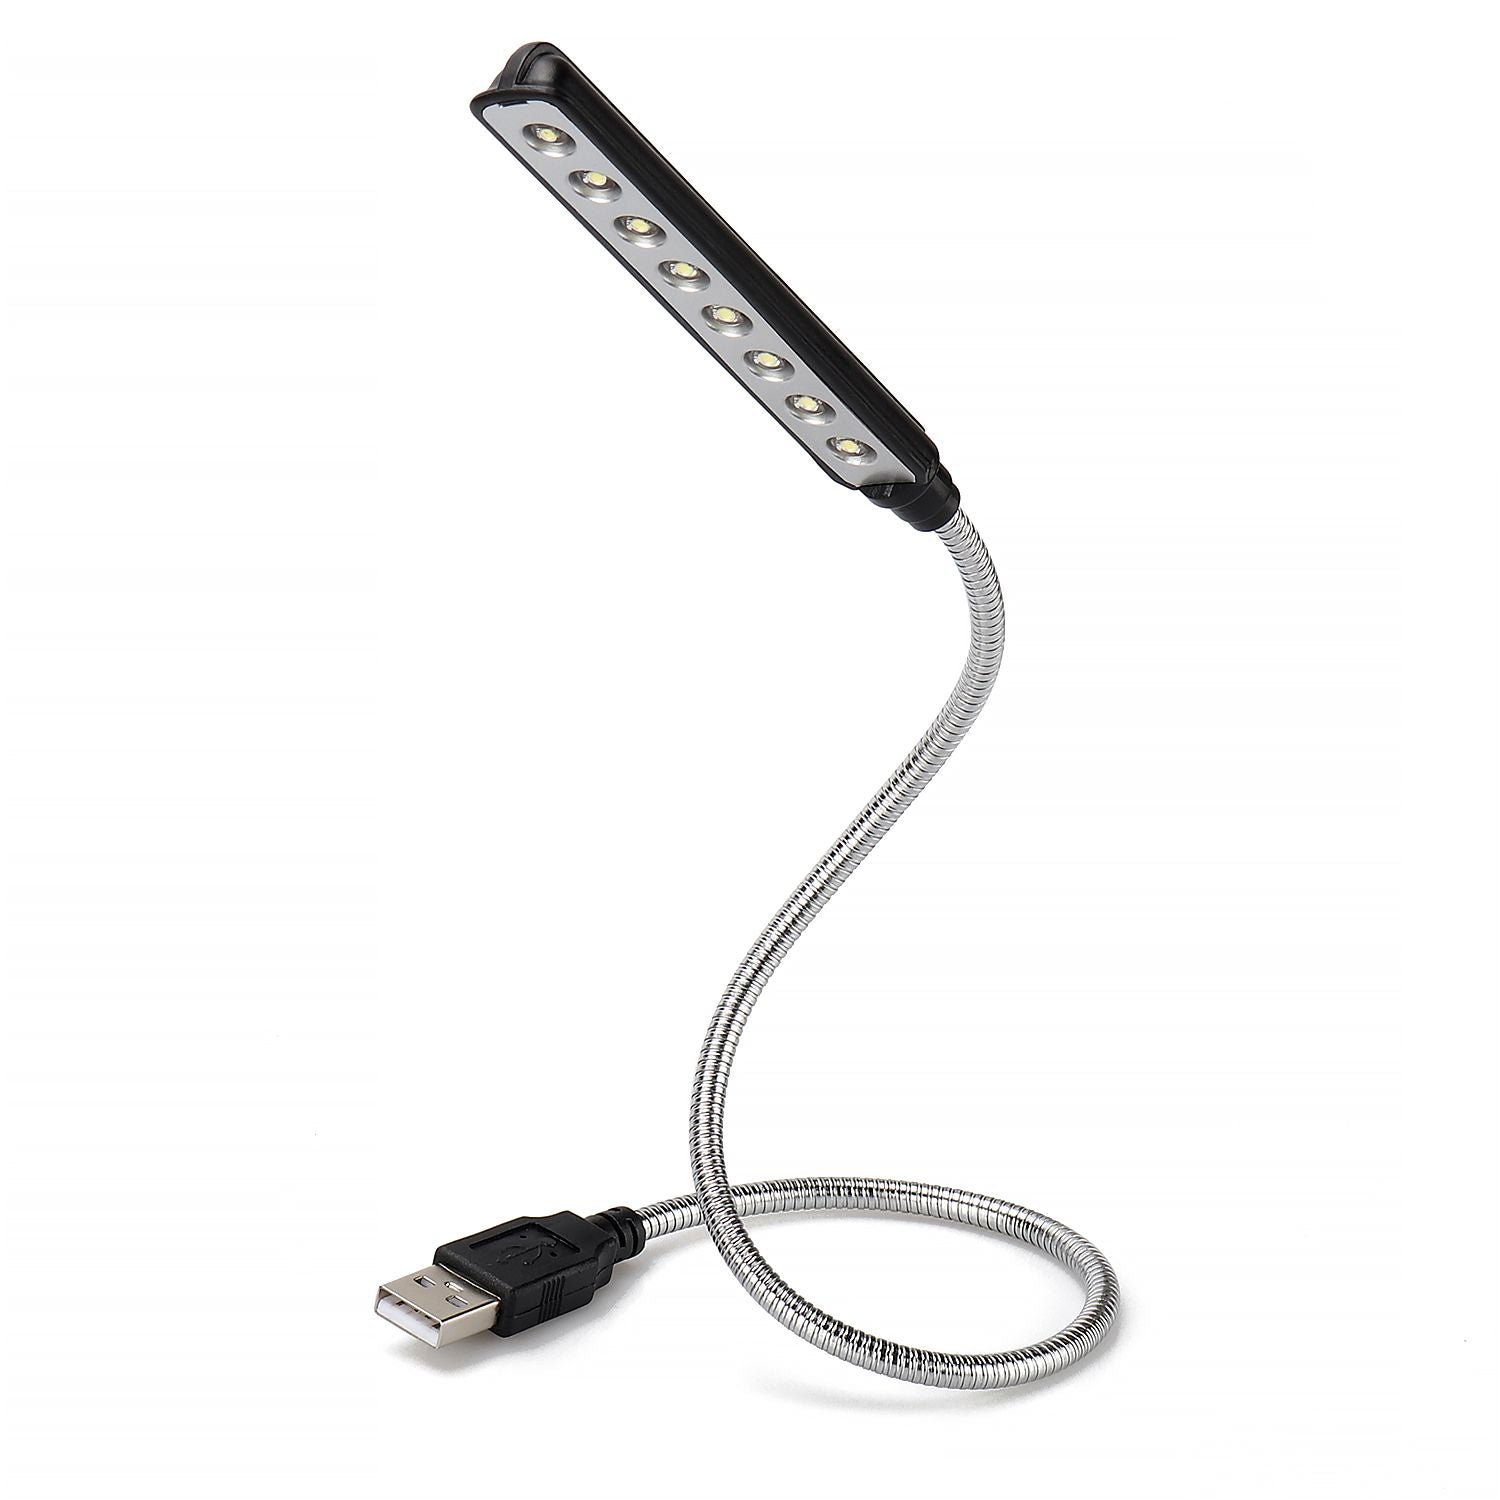 Daffodil ULT05 – USB LED Licht-8 Super Bright LED Leselampe - Für